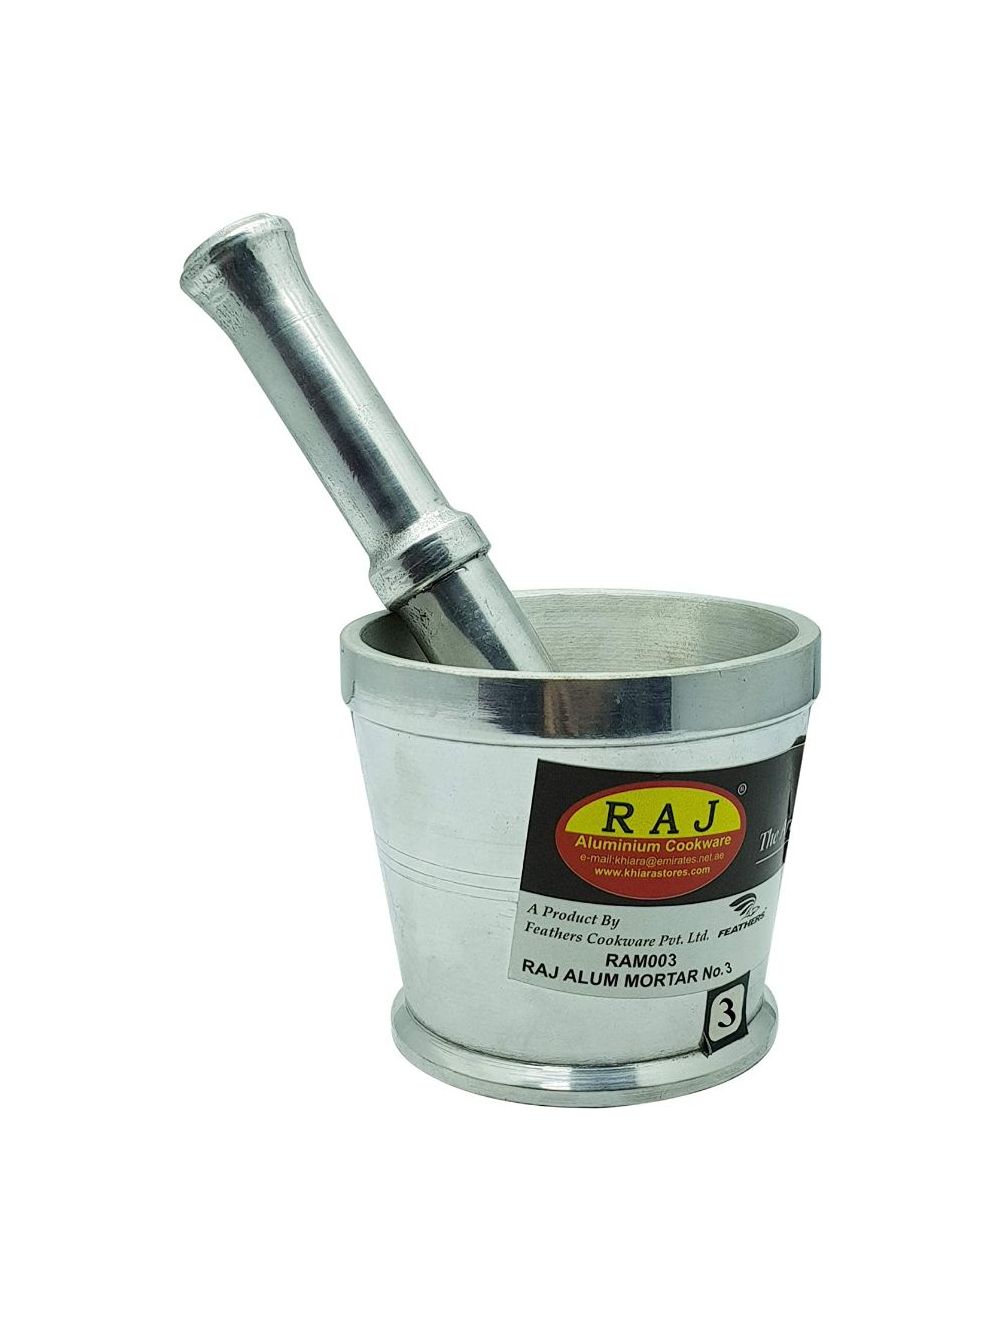 Raj Aluminium Mortar with Stand, Silver, RAM003, 1piece